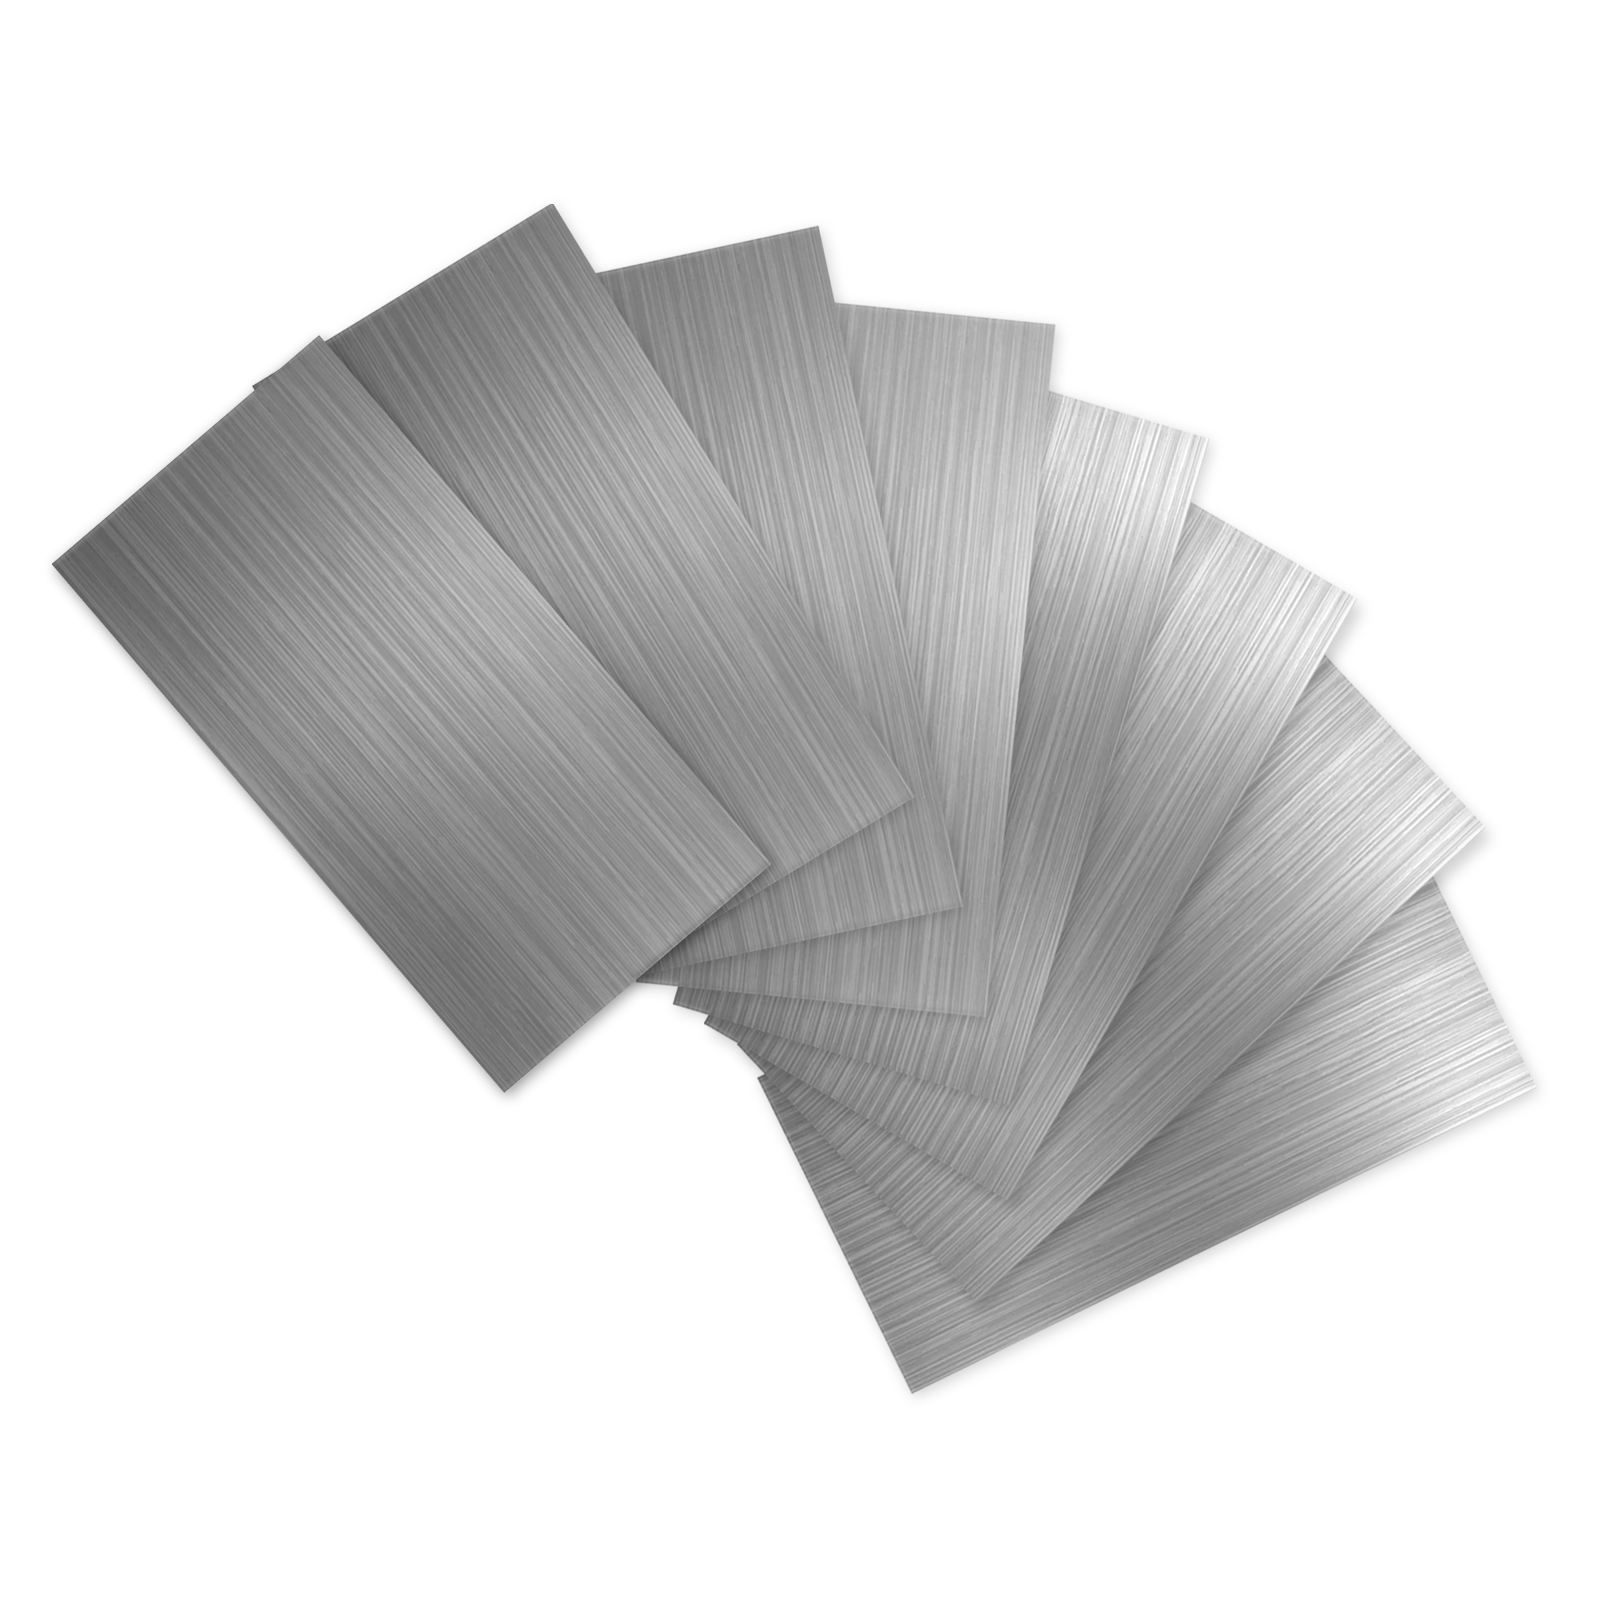 3" x 6" Metal Composite Peel and Stick Backsplash Stainless Steel Tiles